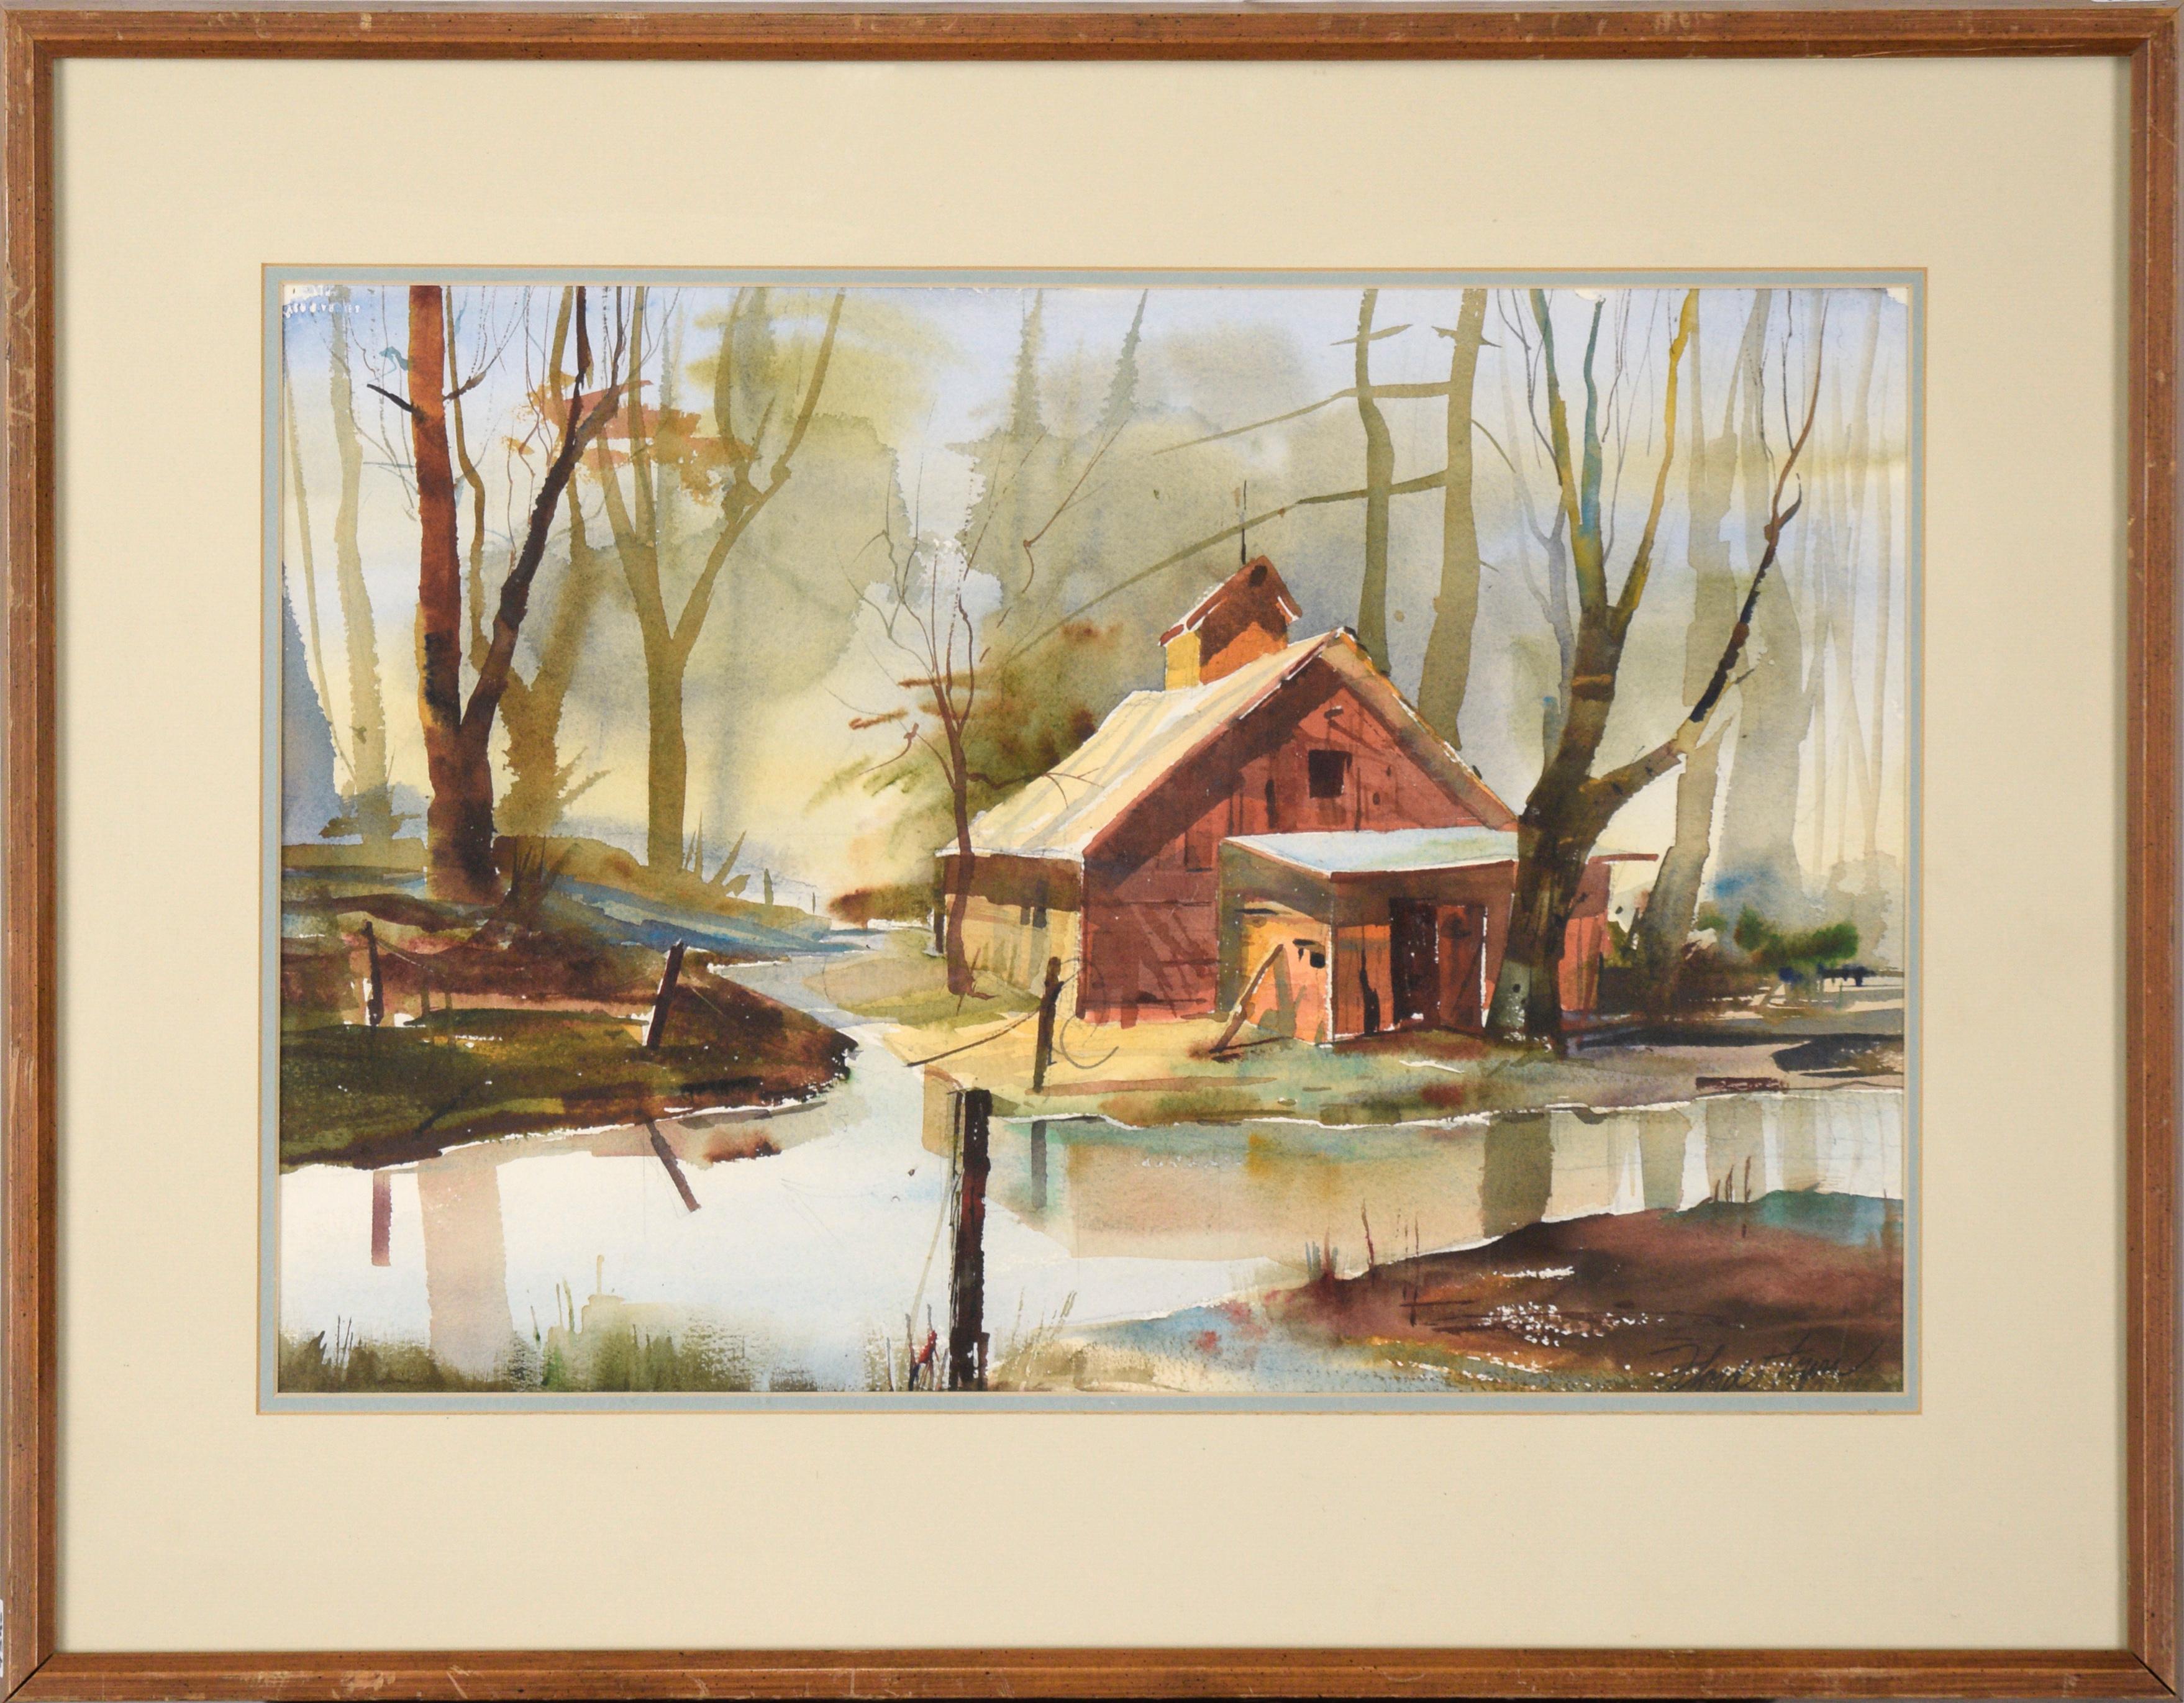 Floyd Town Landscape Art - The Fishing Shack, Landscape Watercolor